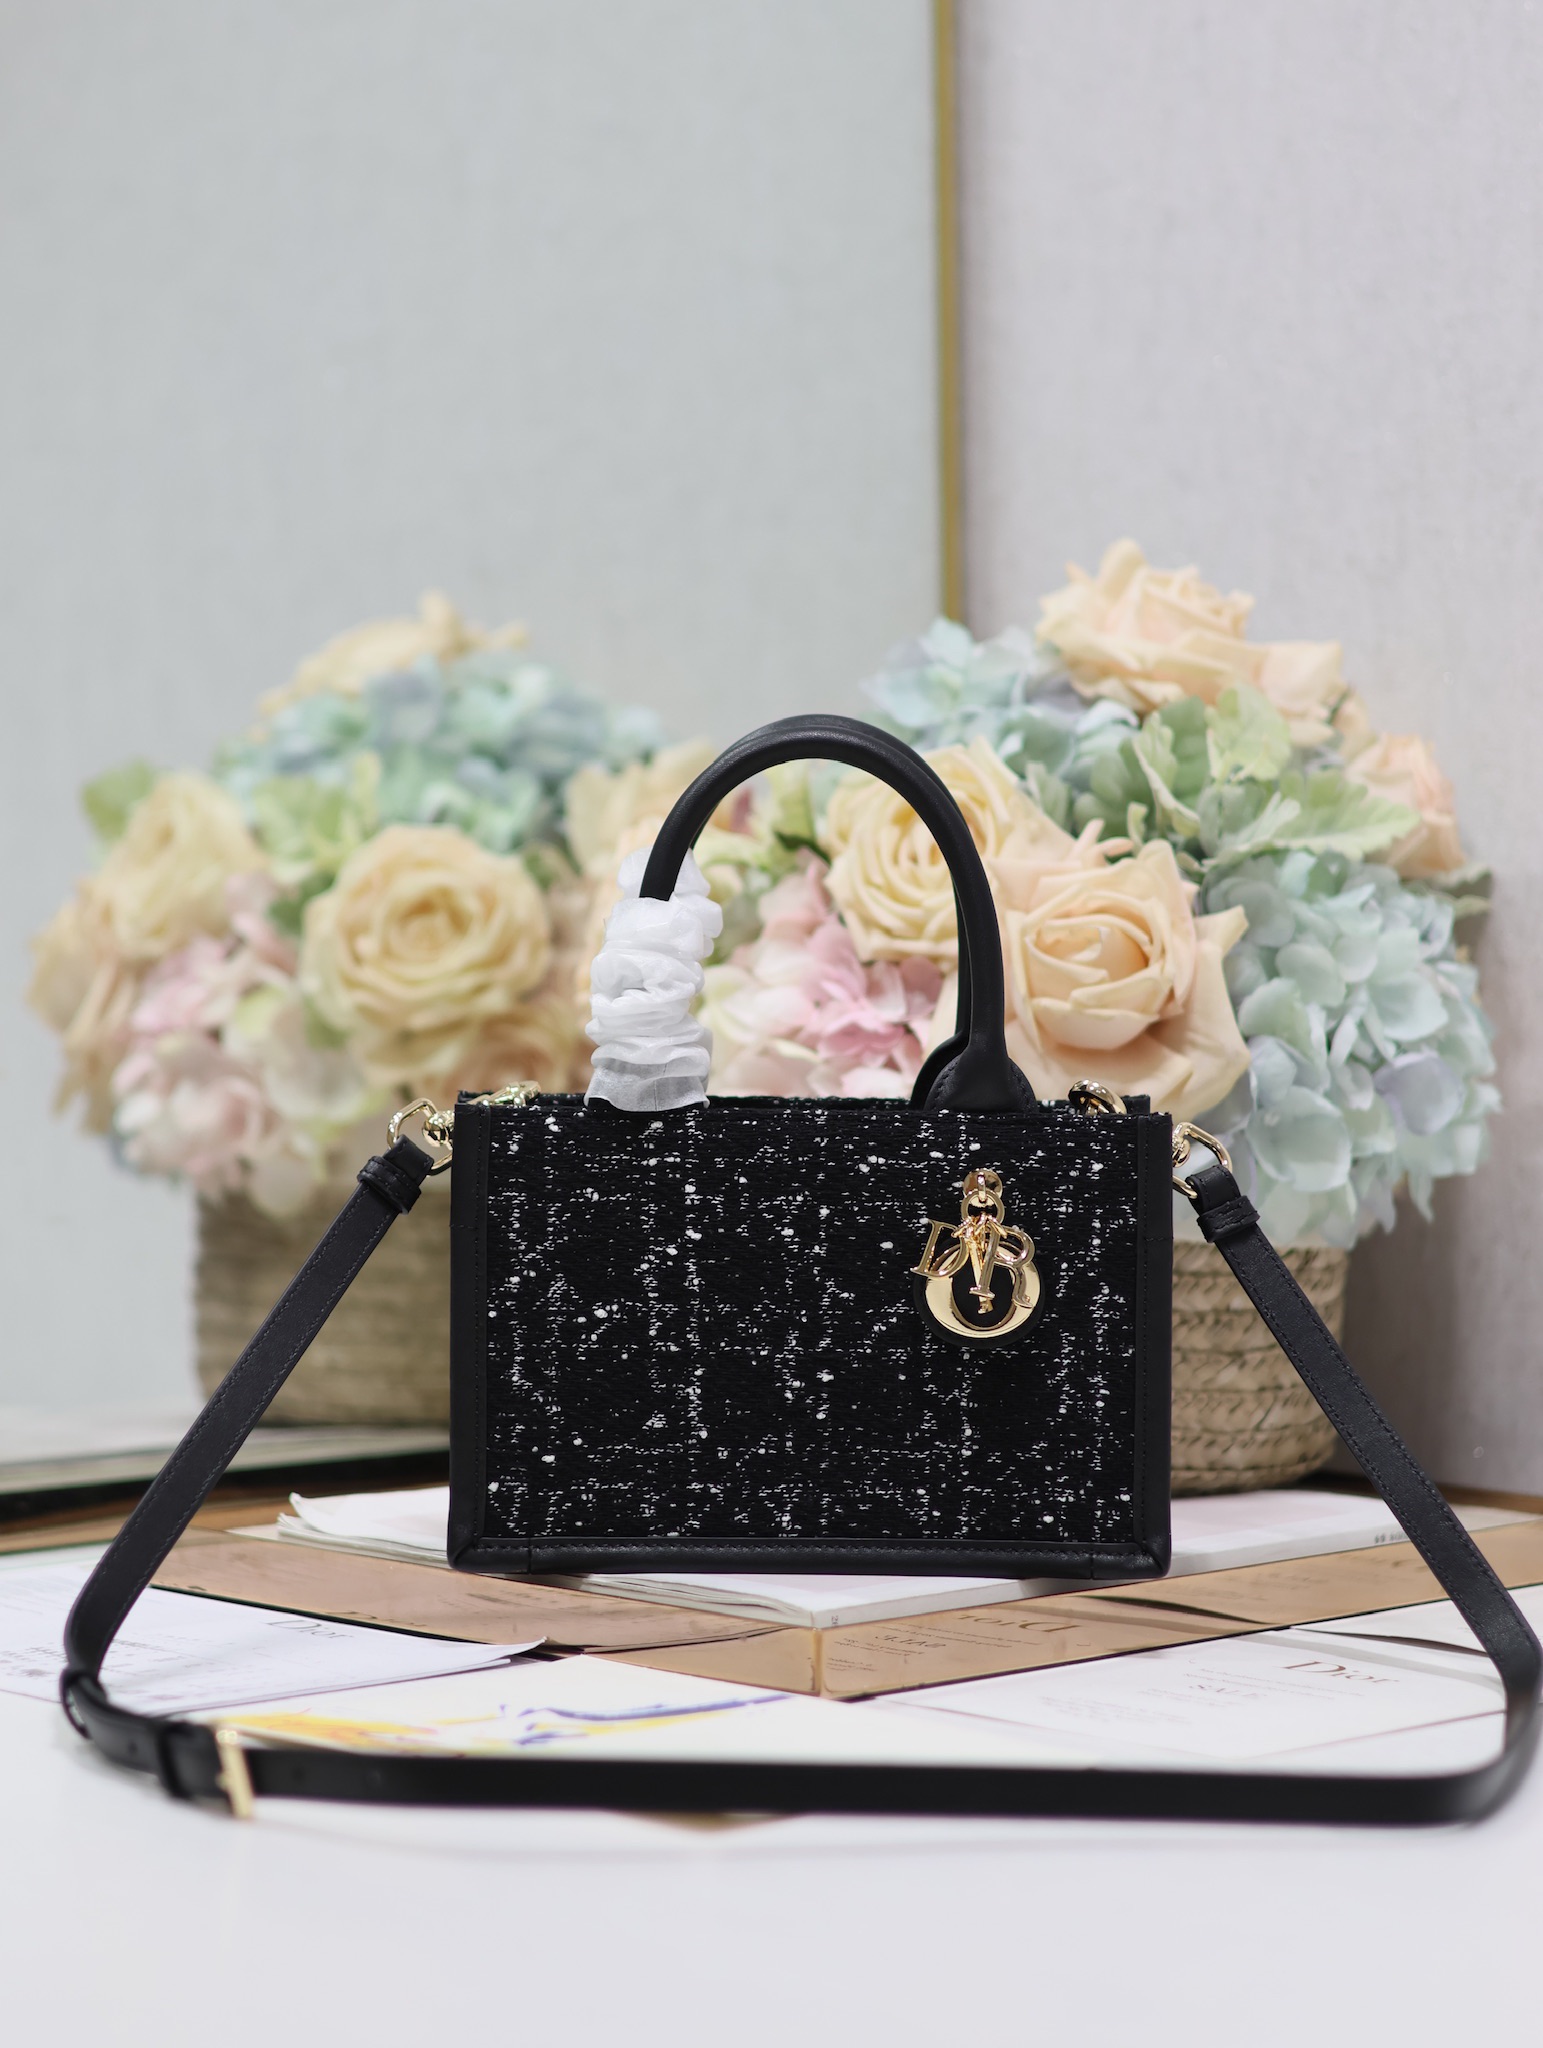 Dior Book Tote Handbags Tote Bags Beige Black Blue Embroidery Spring Collection Oblique Mini